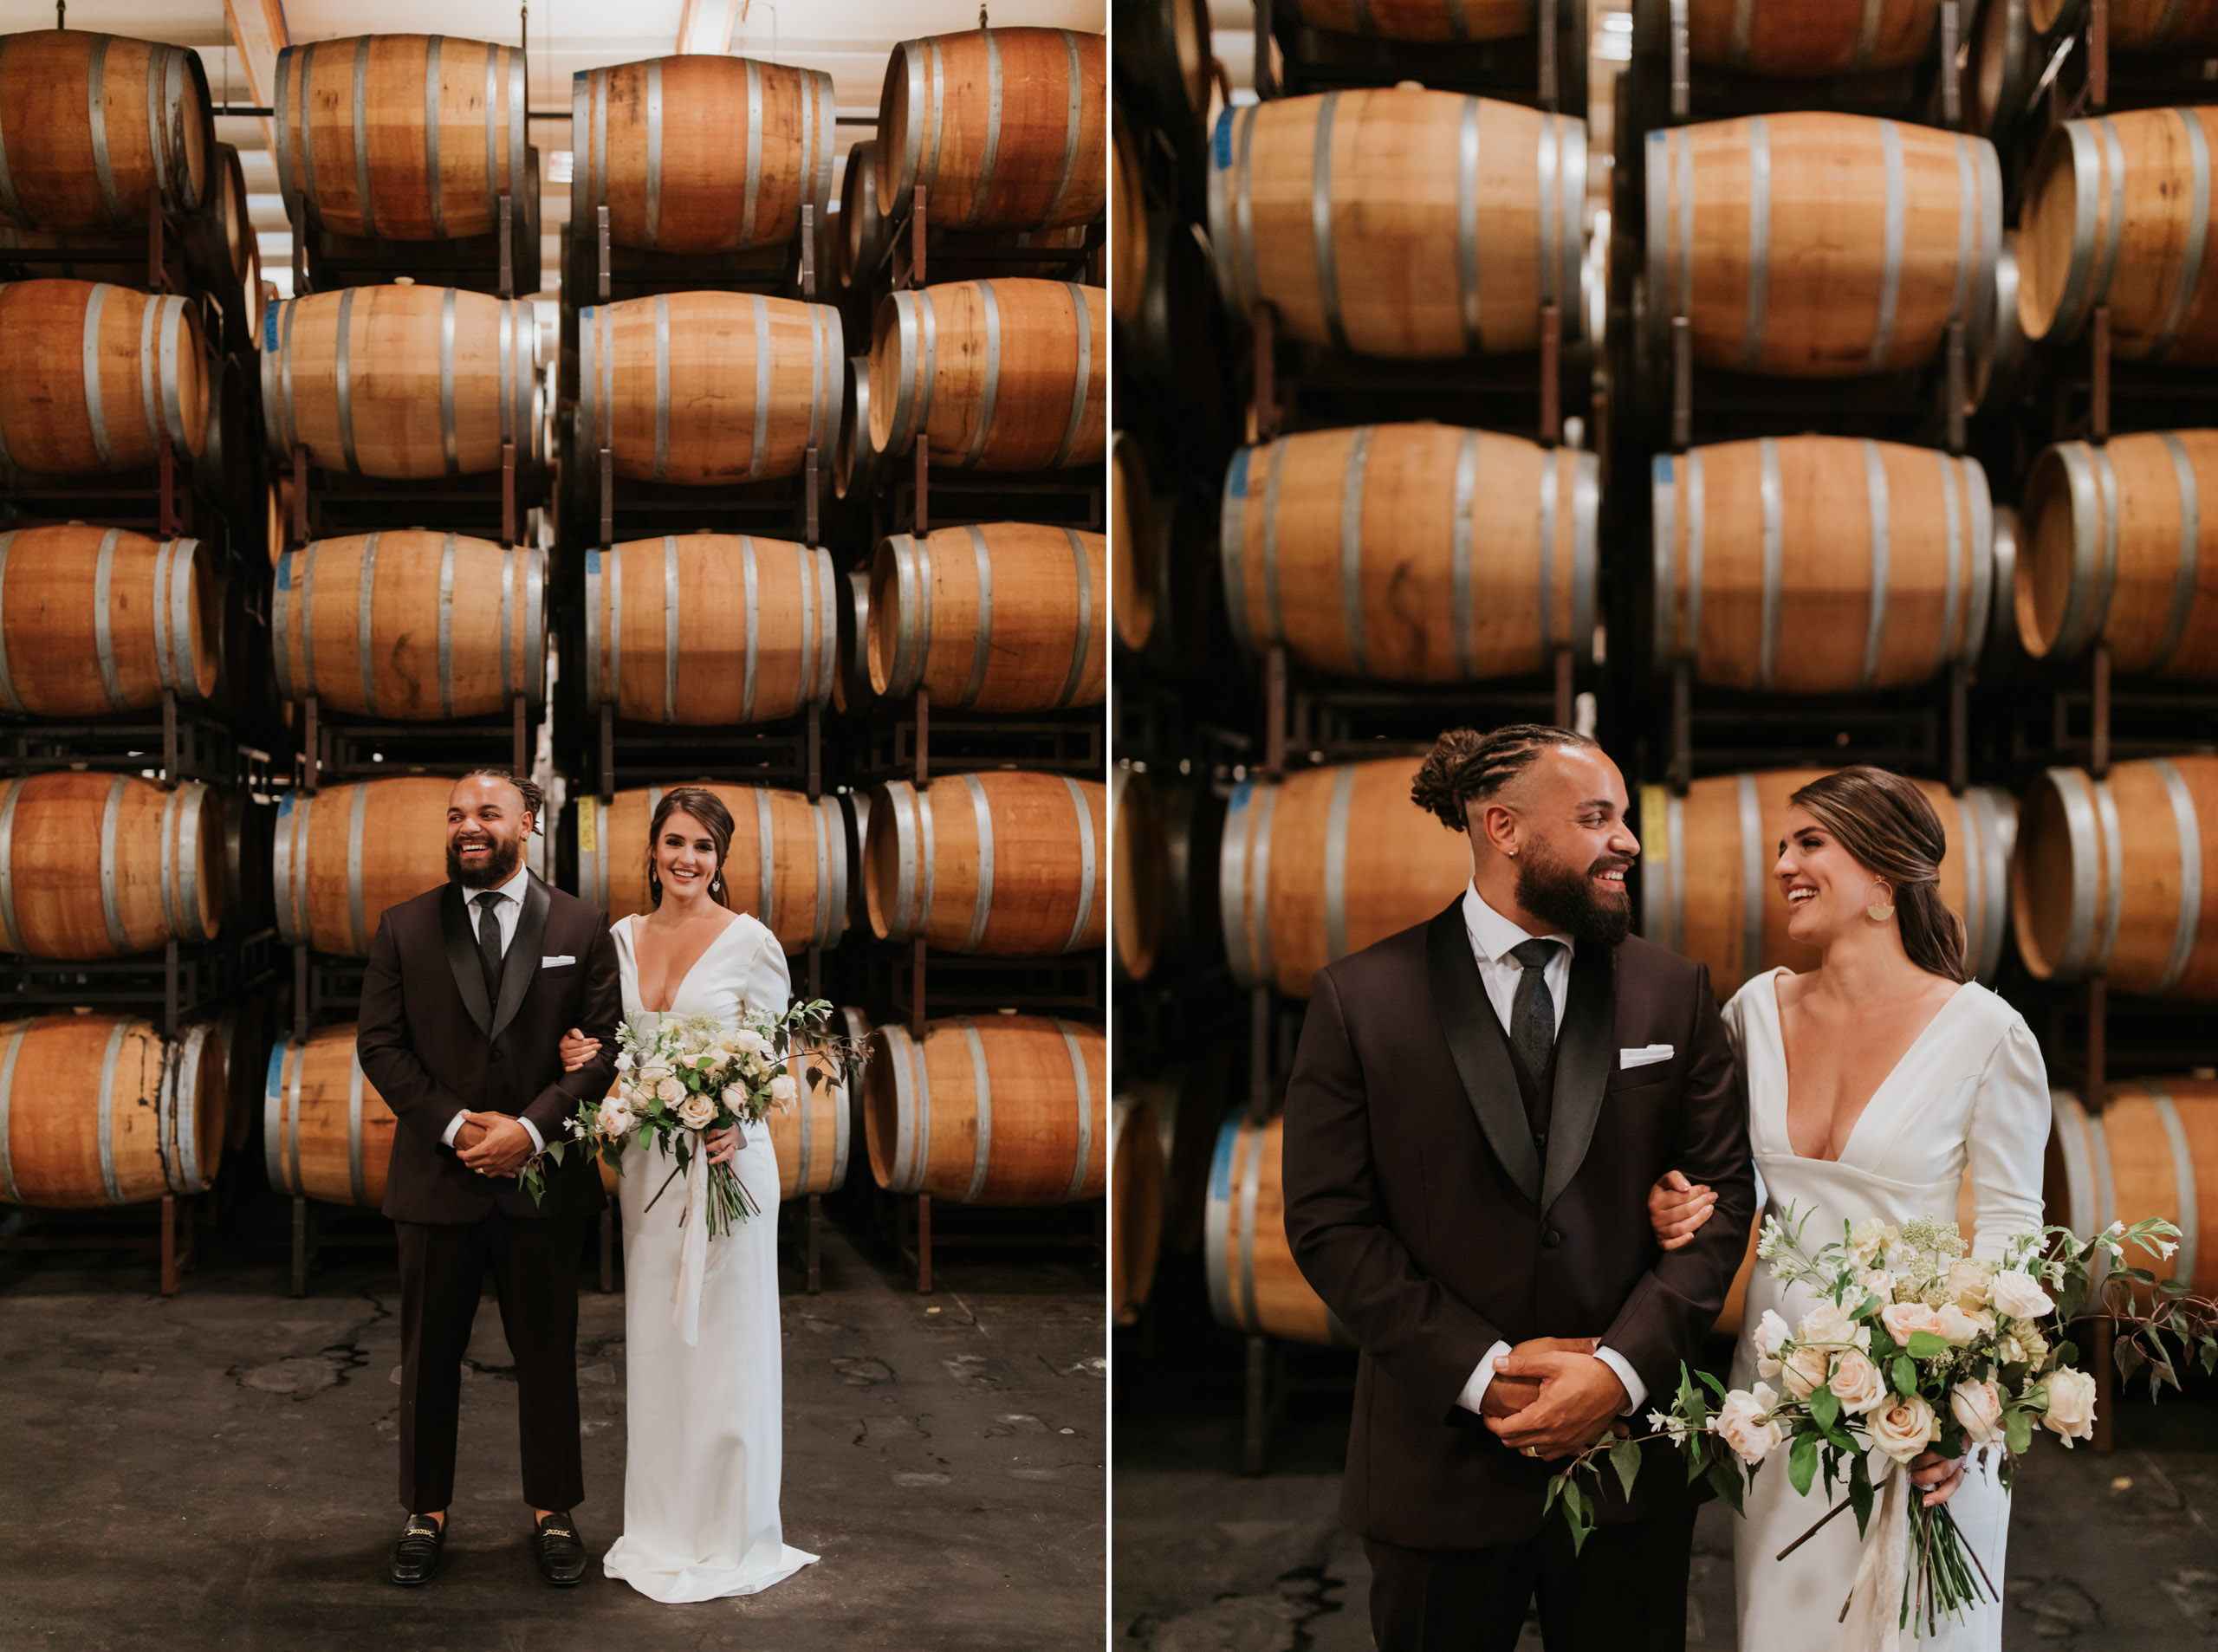 almquist-winery-intimate-wedding-inspo-20